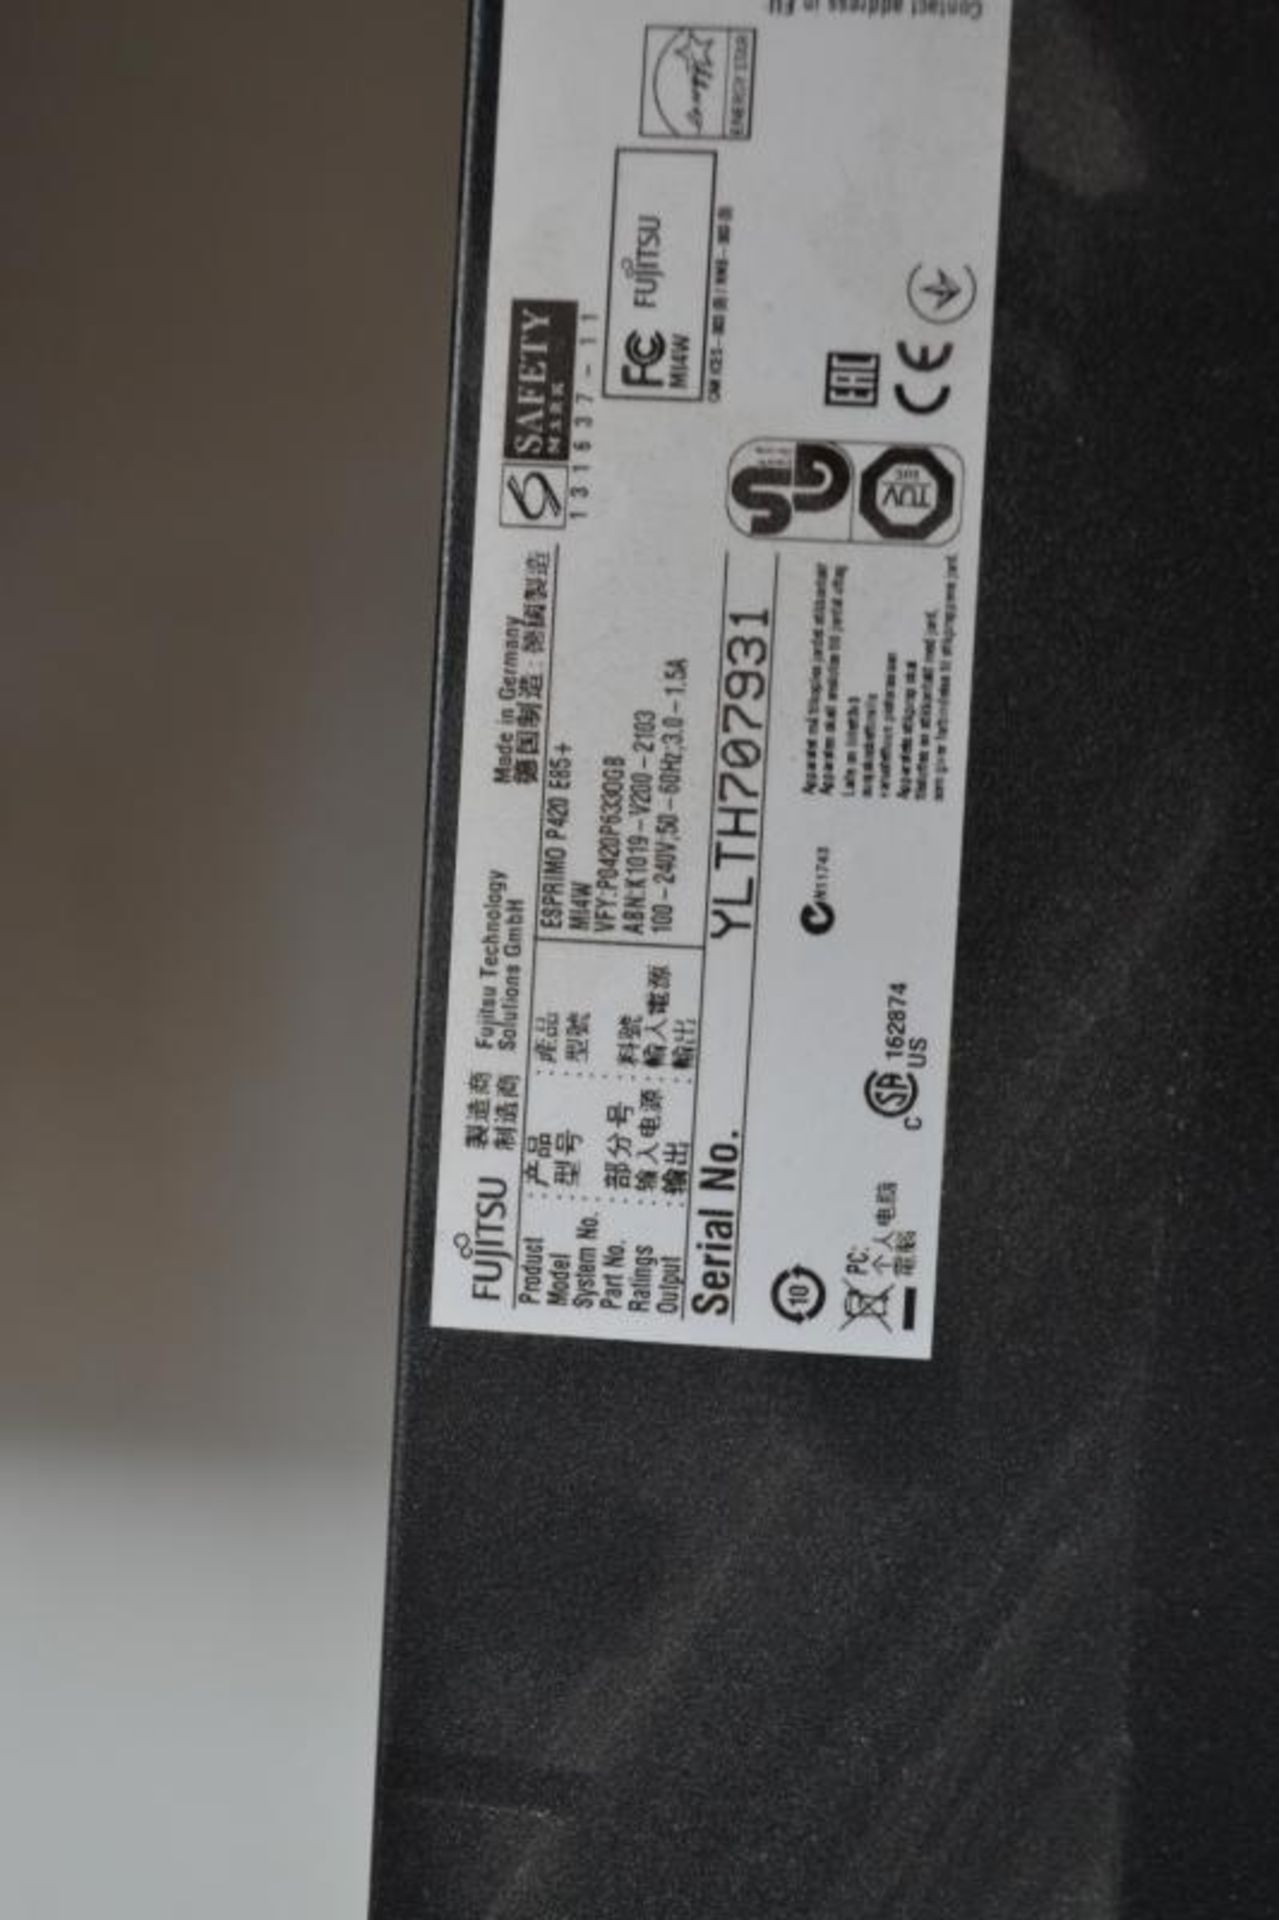 1 x FUJITSU ESPRIMO P400 DESKTOP COMPUTER INTEL I3-2130 3.40GHZ 4GB RAM Hard Drive Not included - R - Image 3 of 4